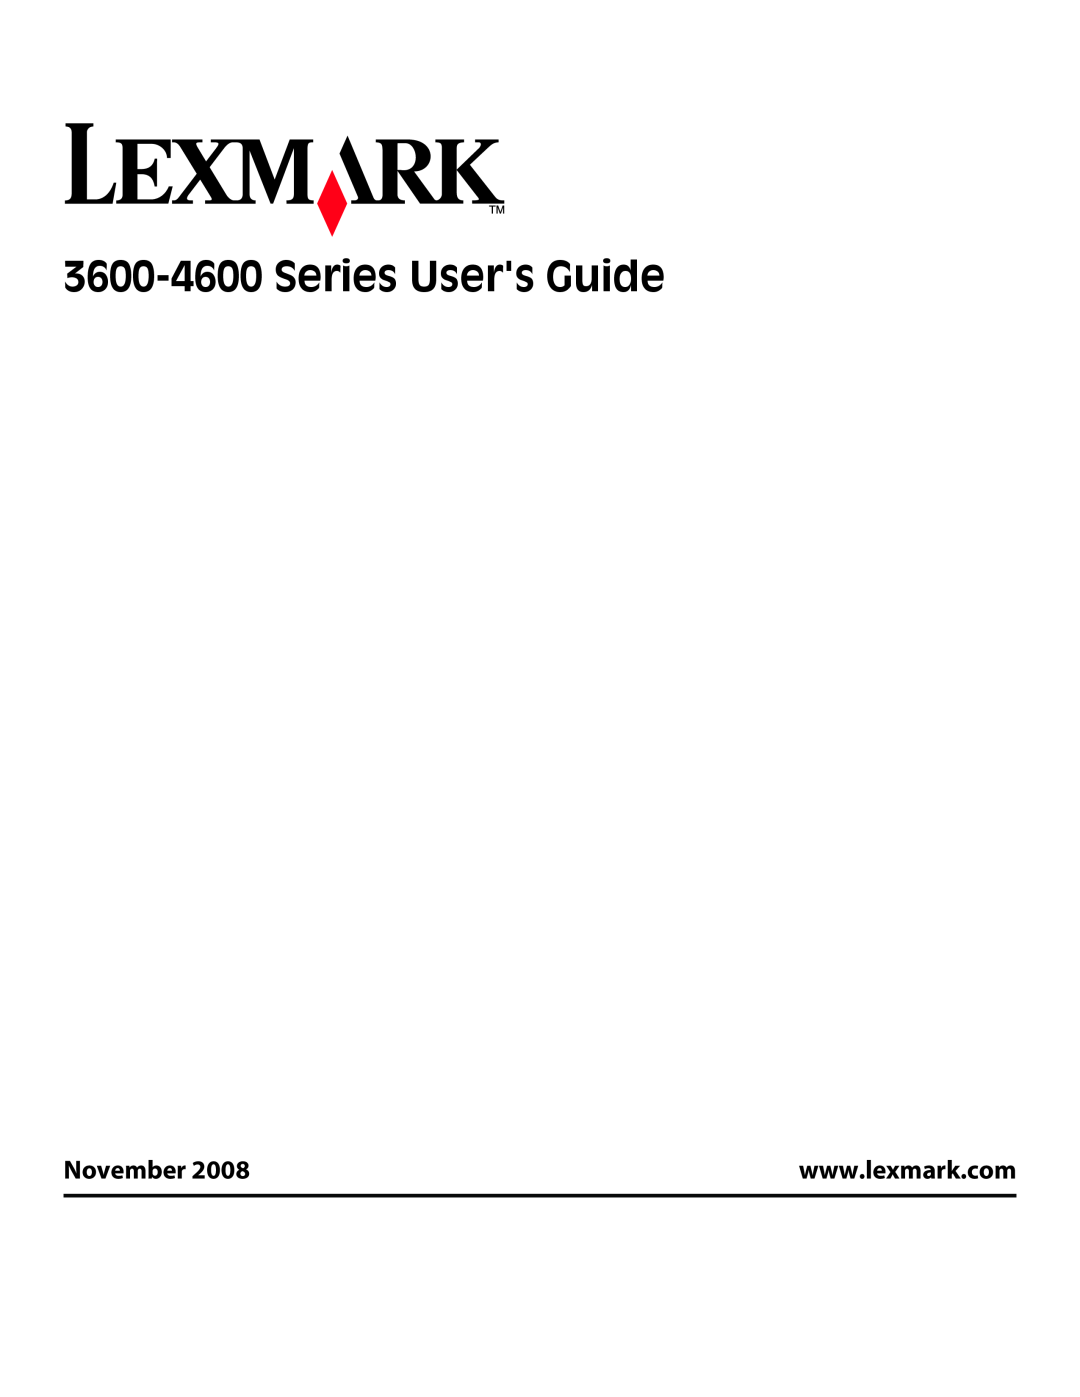 Lexmark 3600, 4600 manual Series Users Guide, November 